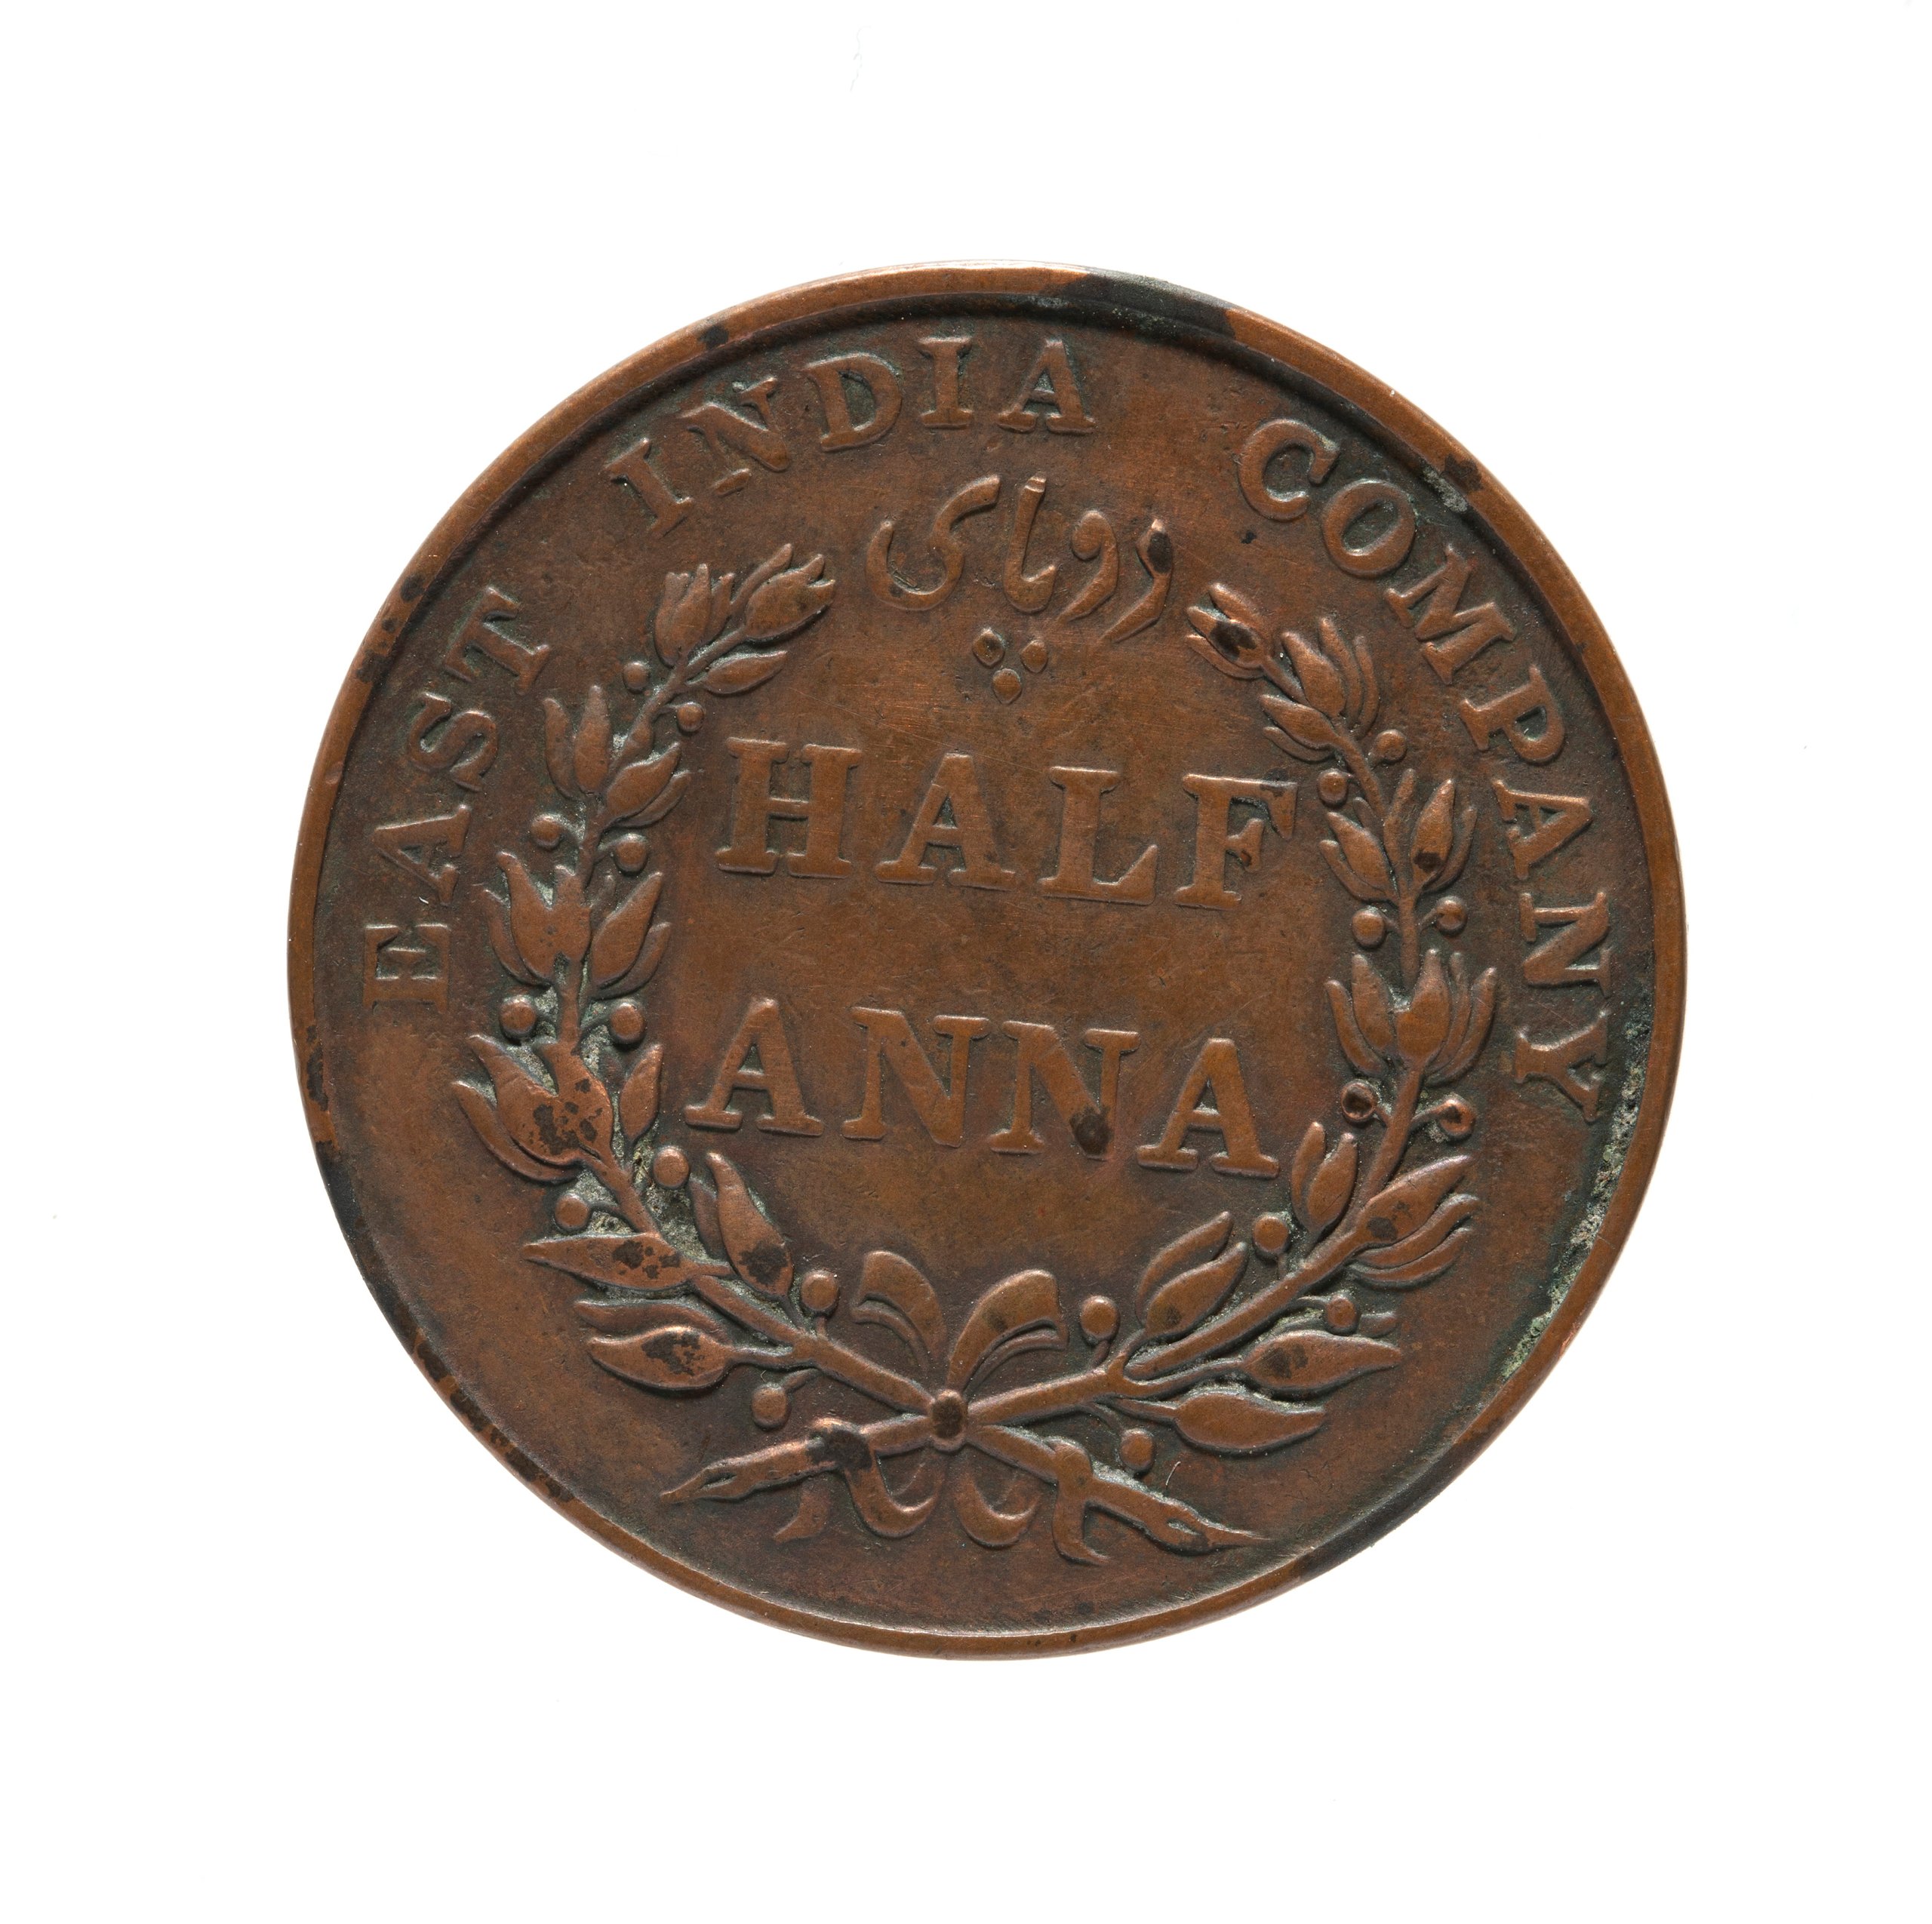 Bengali Half Anna coin